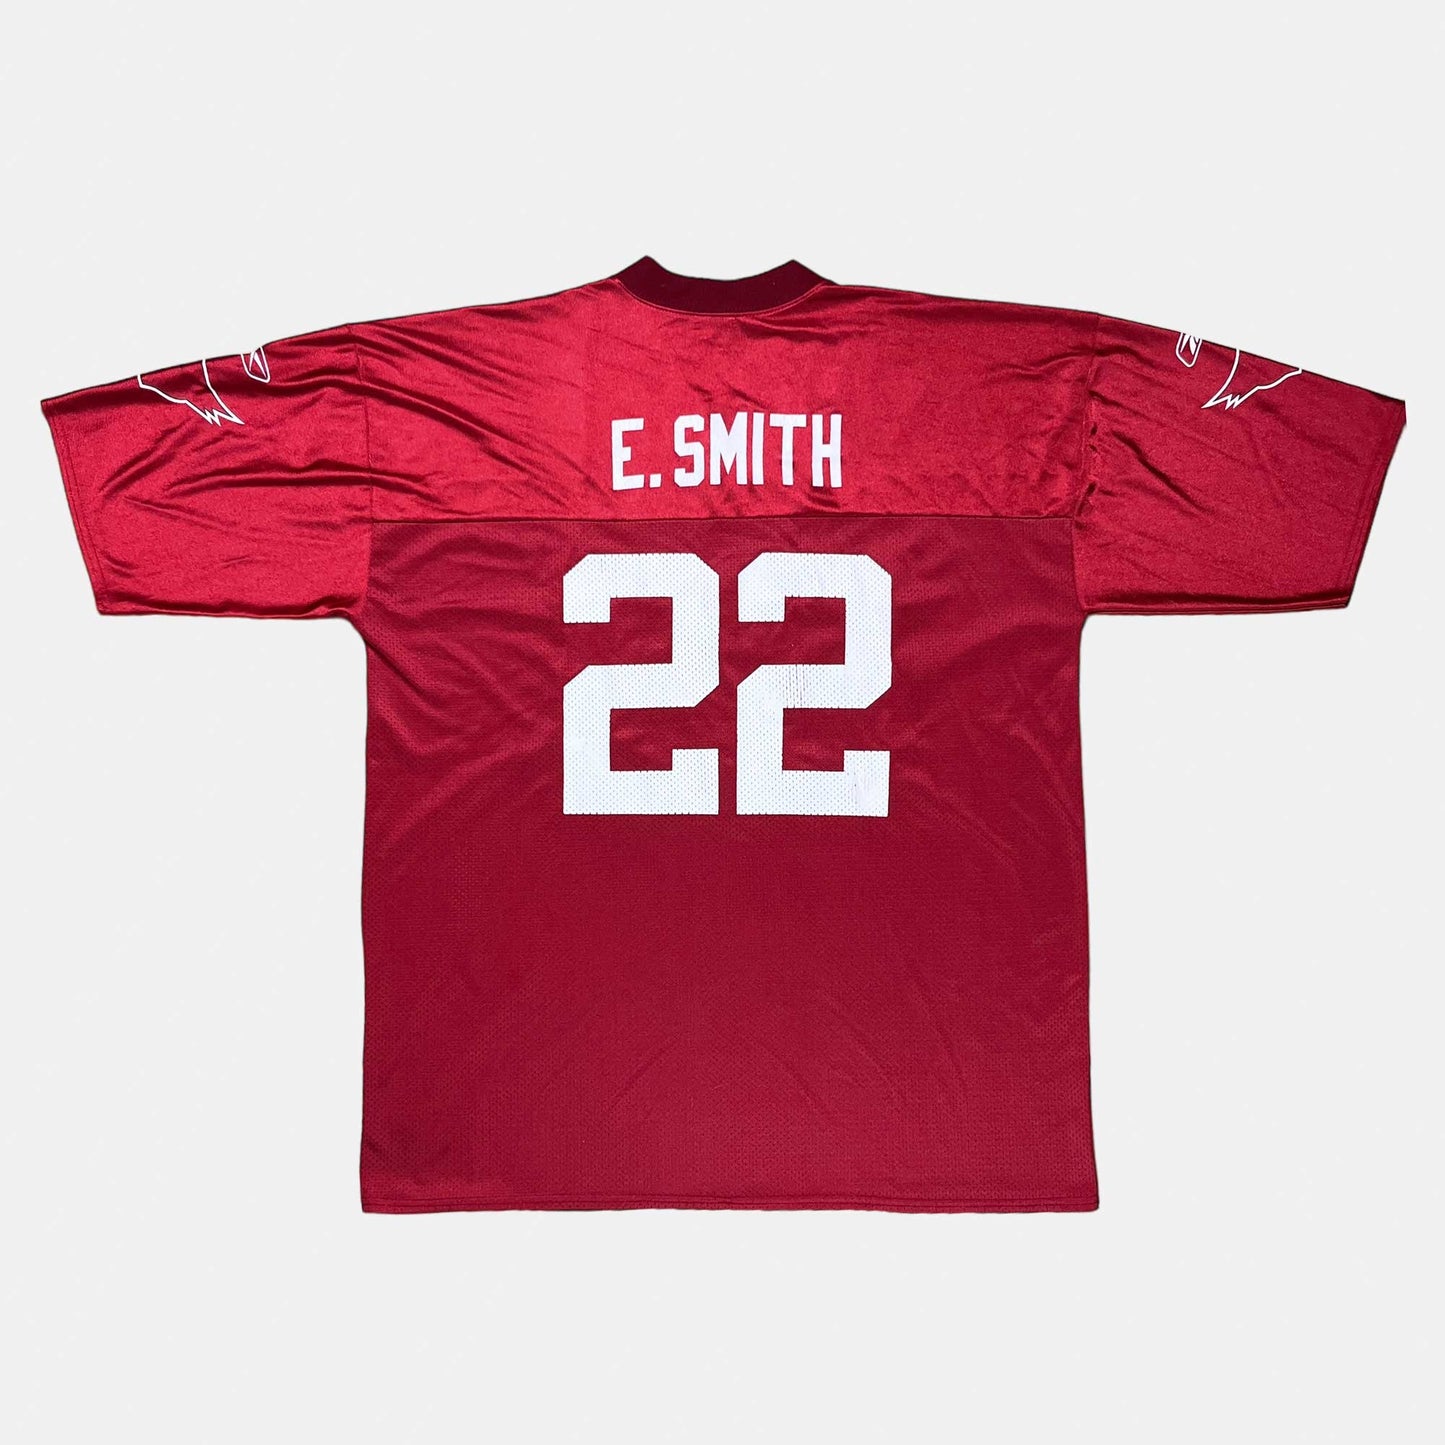 Arizona Cardinals - Emmitt Smith - NFL Trikot - Größe XXL  - Reebok - NFL Trikot